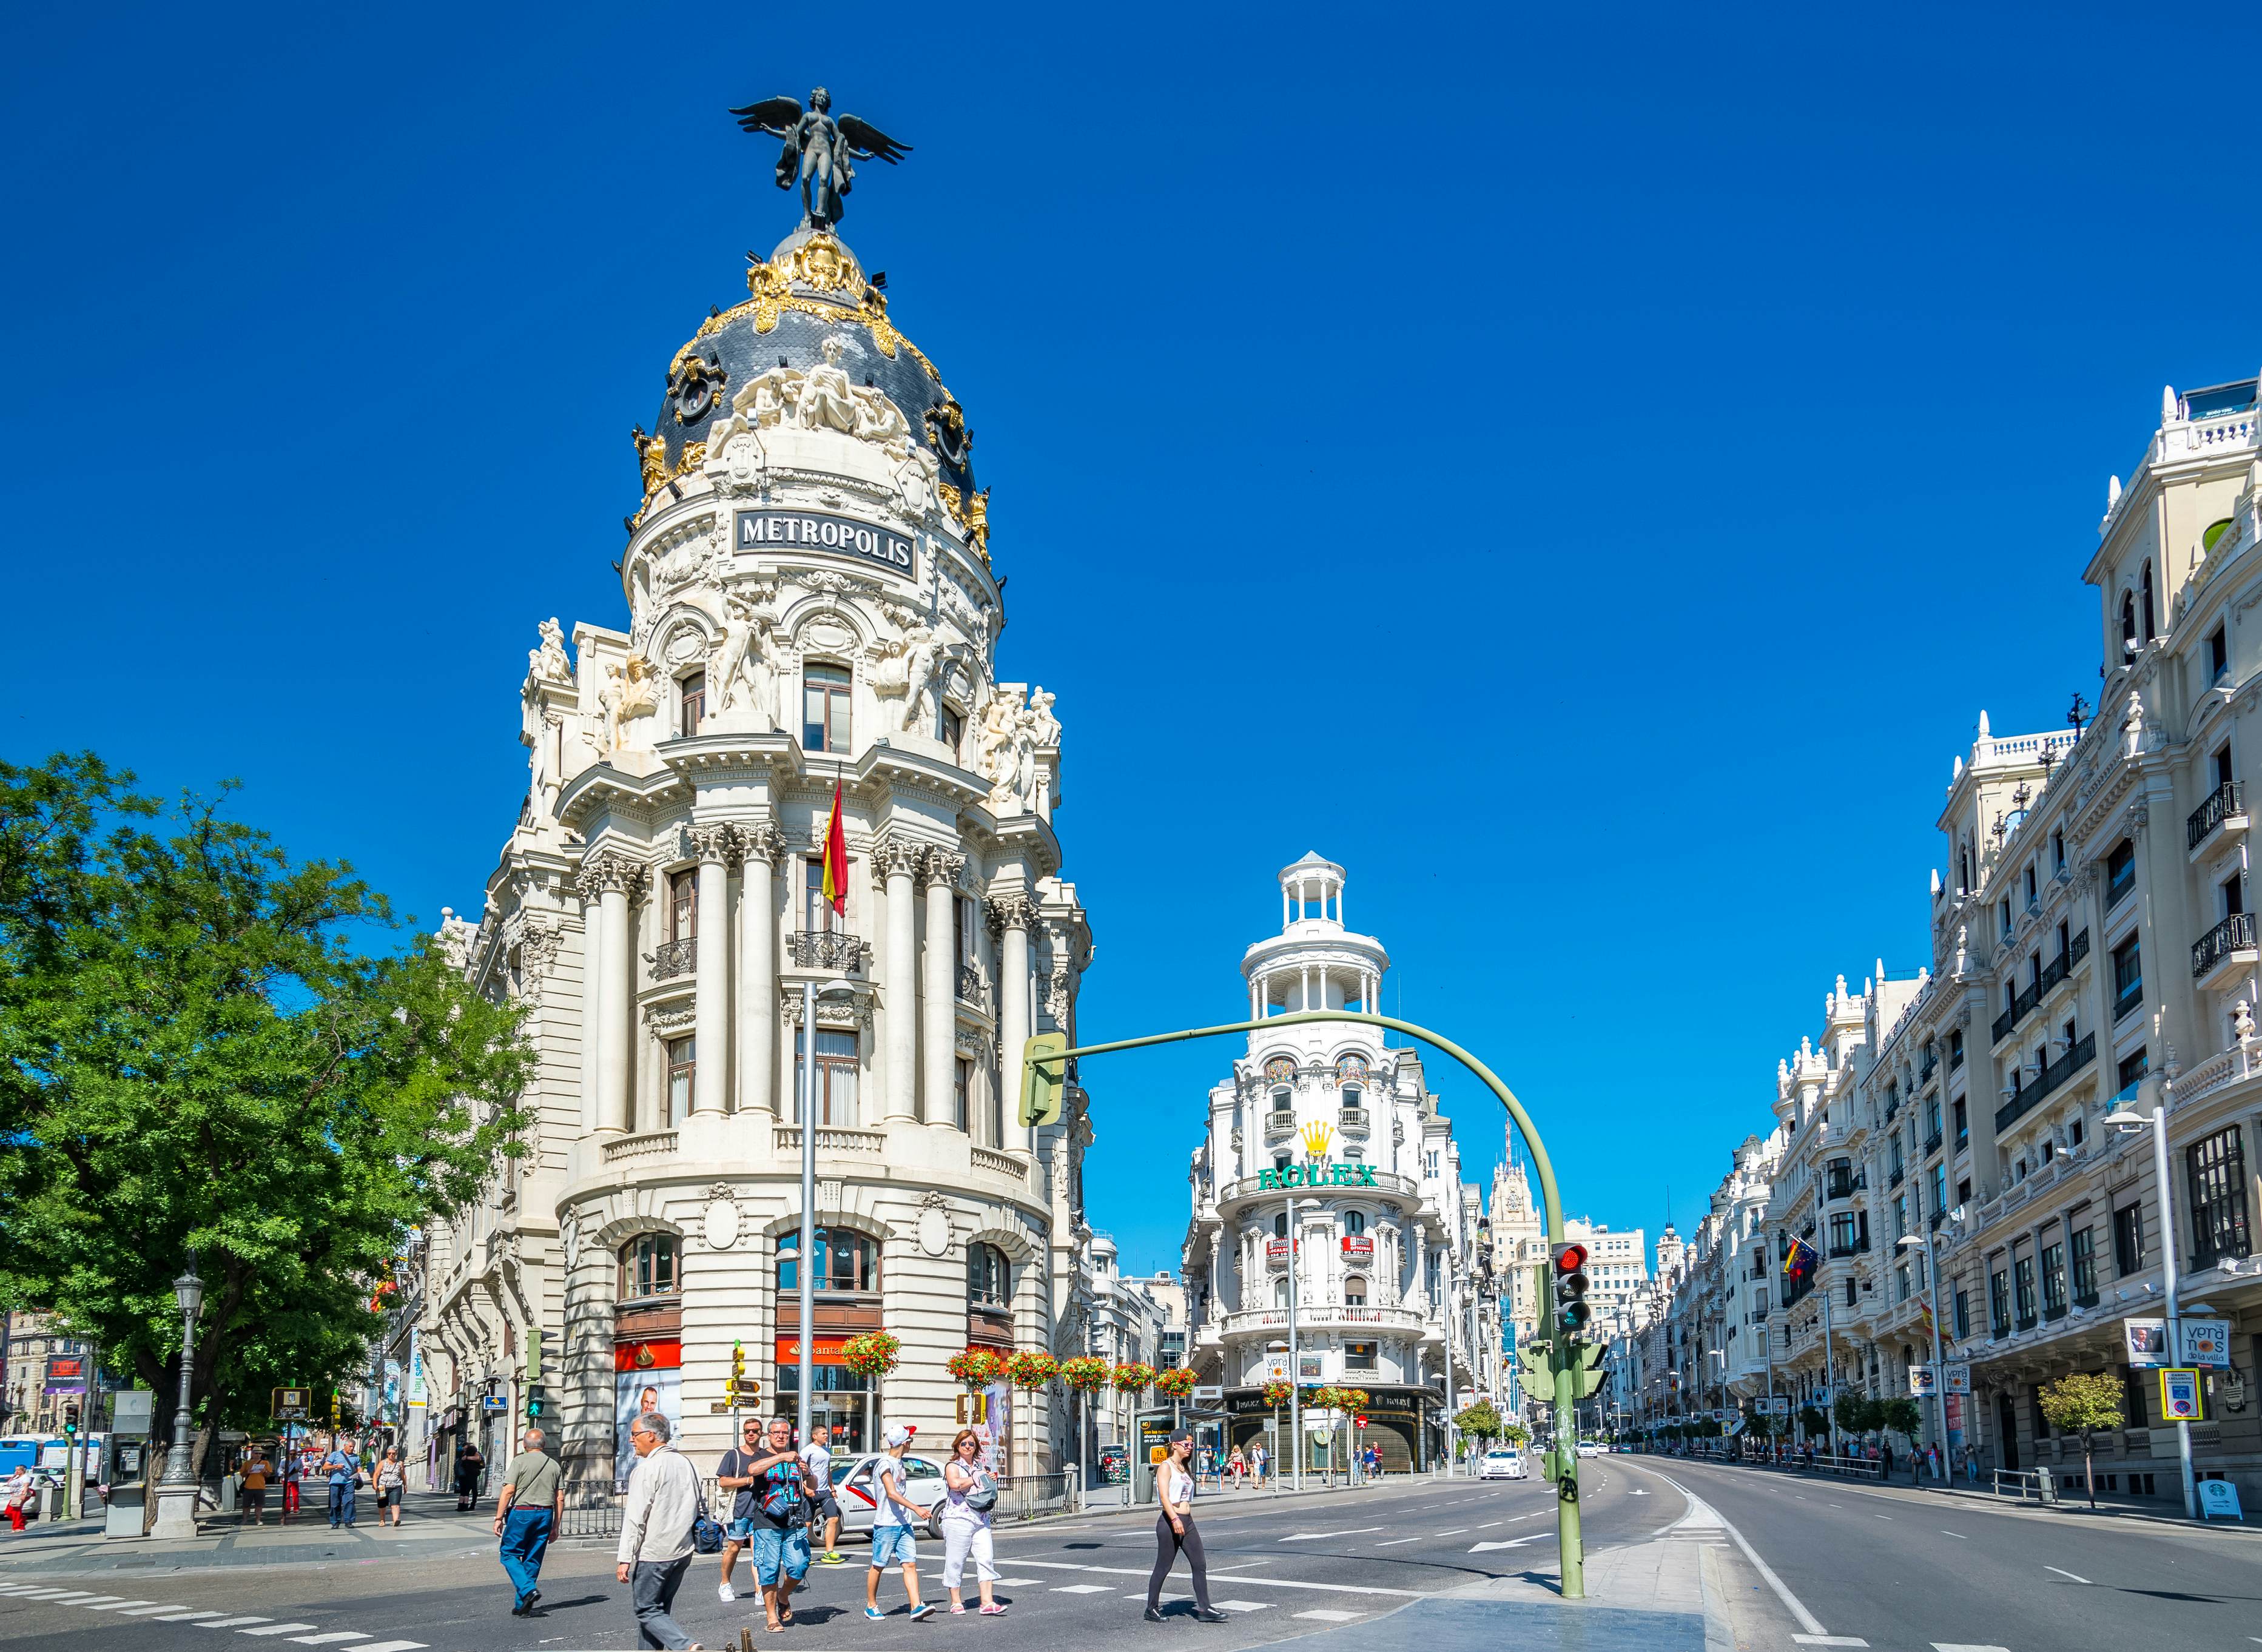 skrige klient uafhængigt Best free things to do in Madrid - Lonely Planet